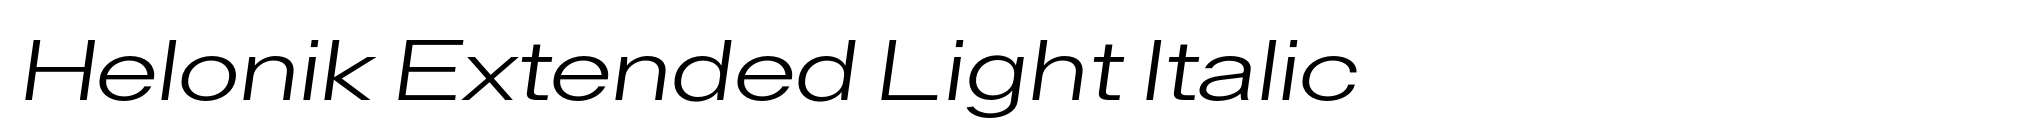 Helonik Extended Light Italic image